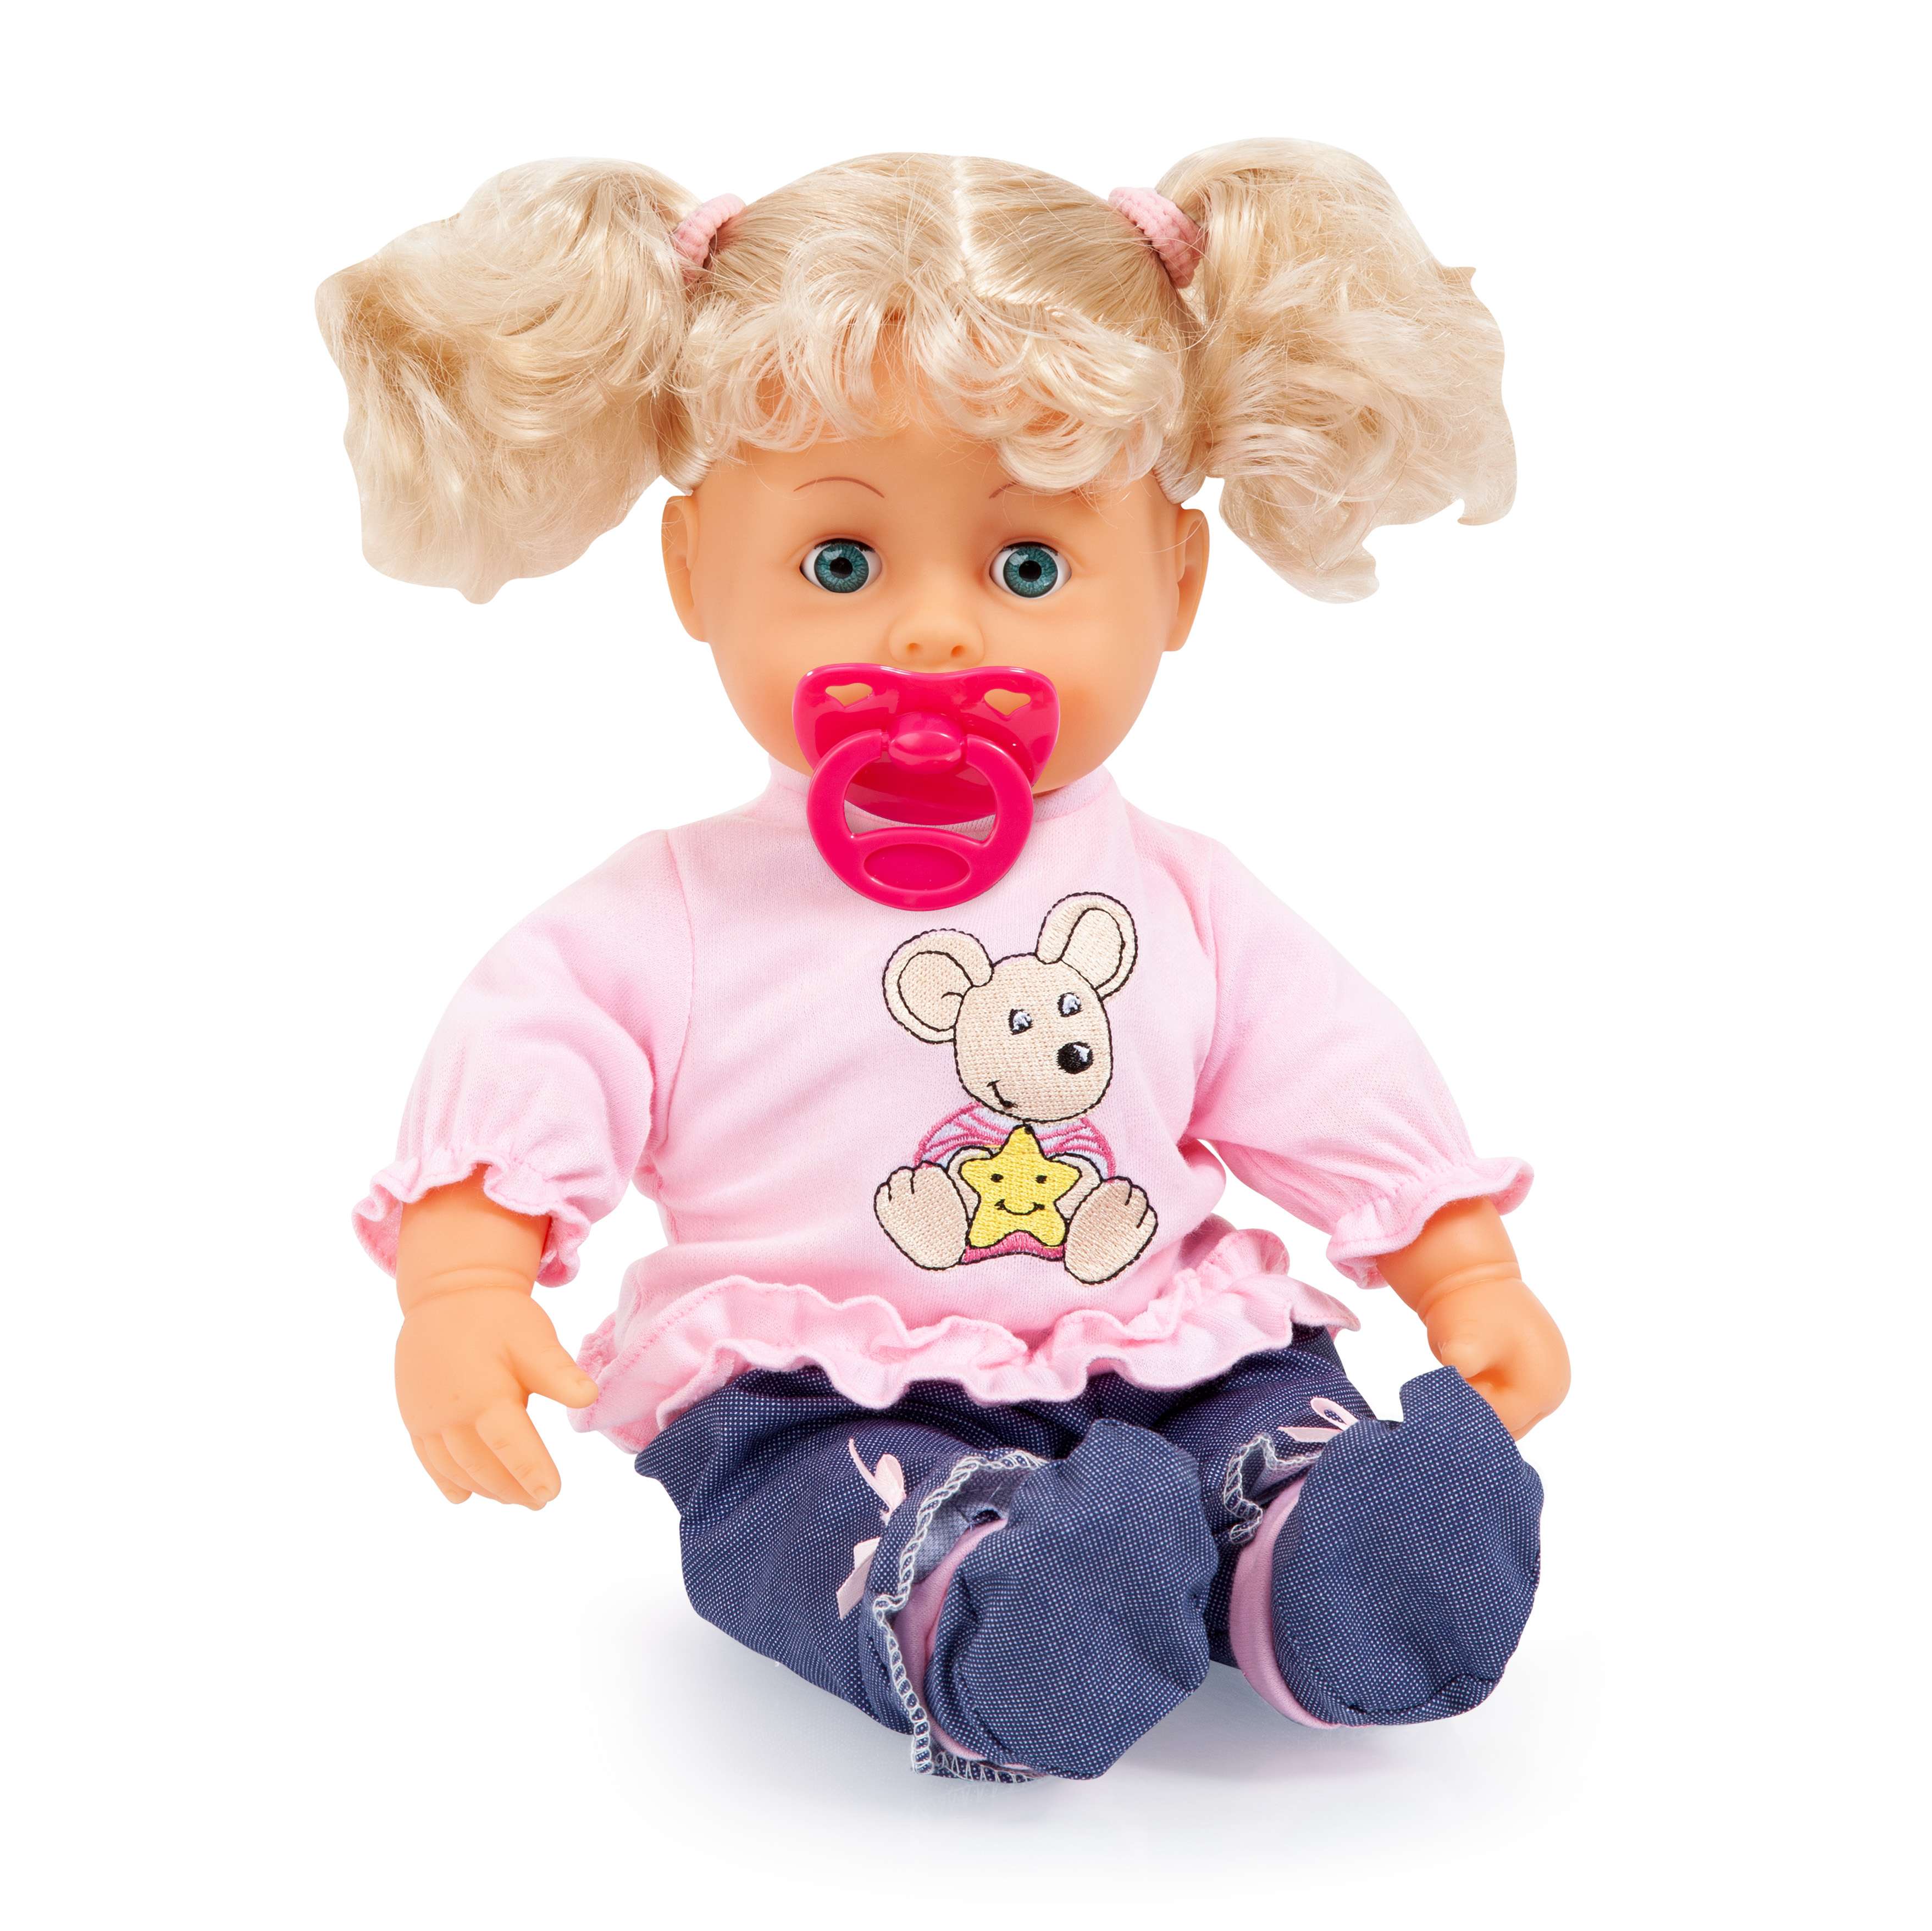 Bayer - Puppe - Interactive Baby 38 cm - Blond